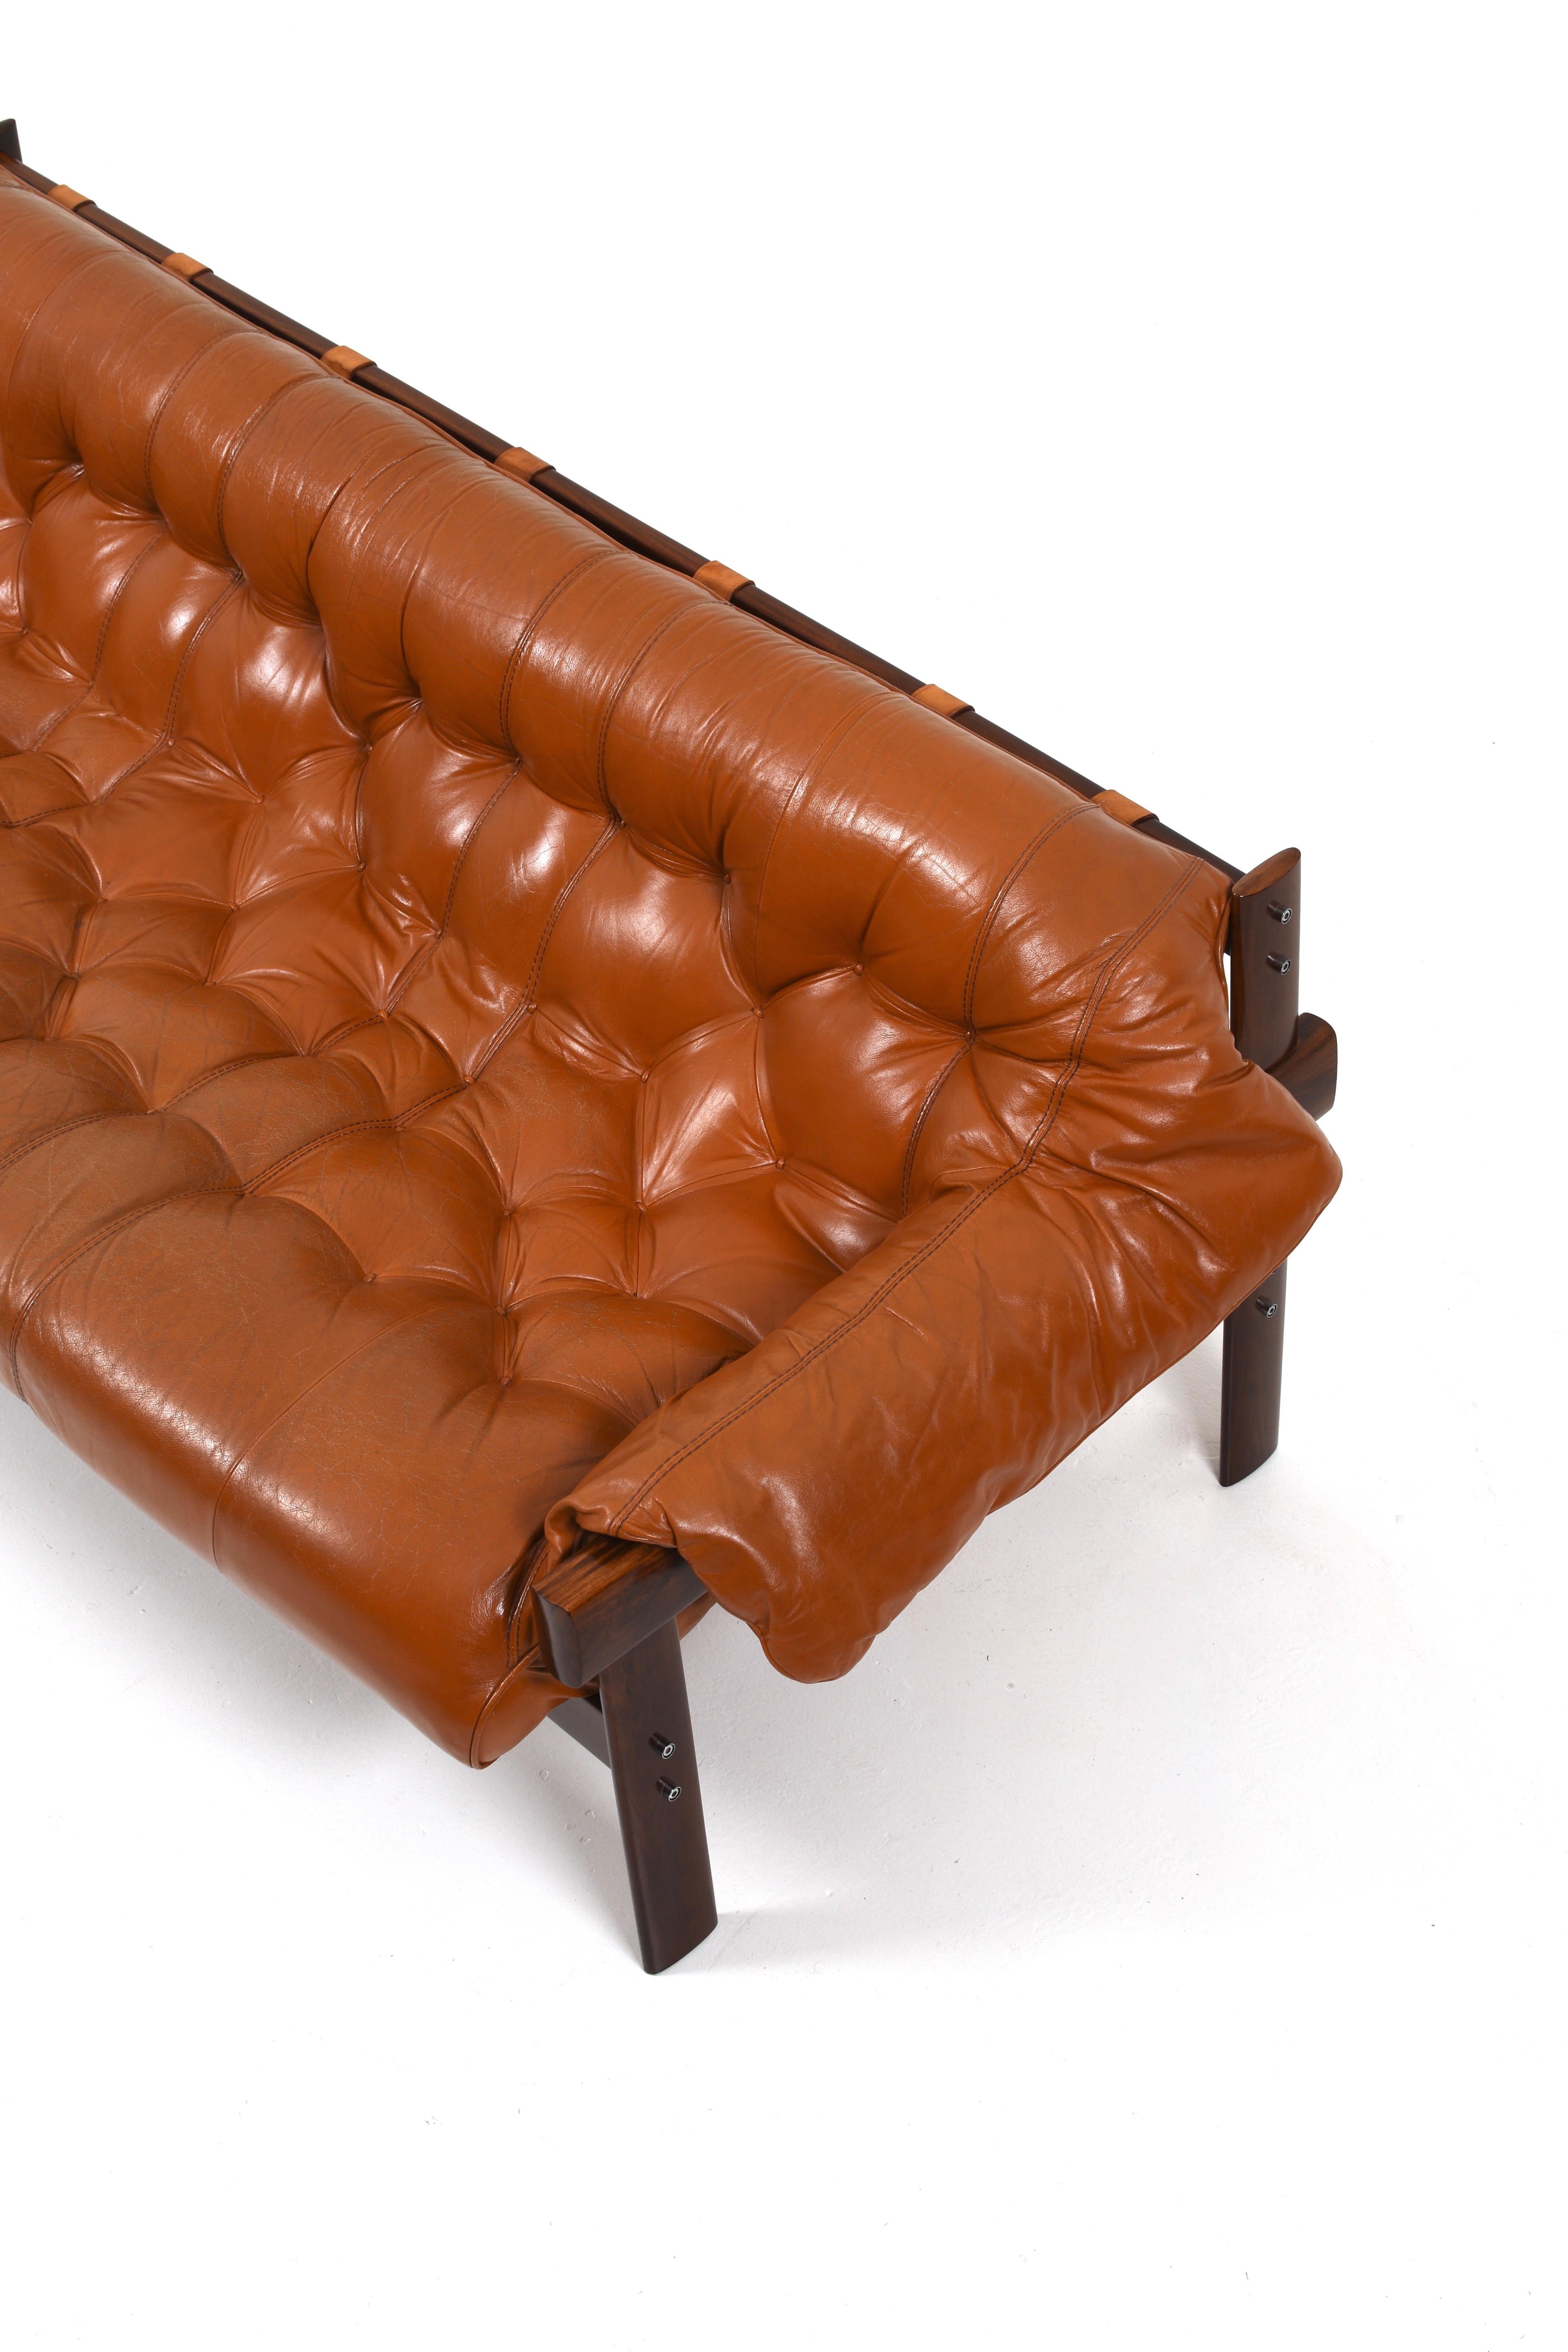 Mid-Century Modern Percival Lafer MP-41 sofa in cognac leather, Brazil 1970s